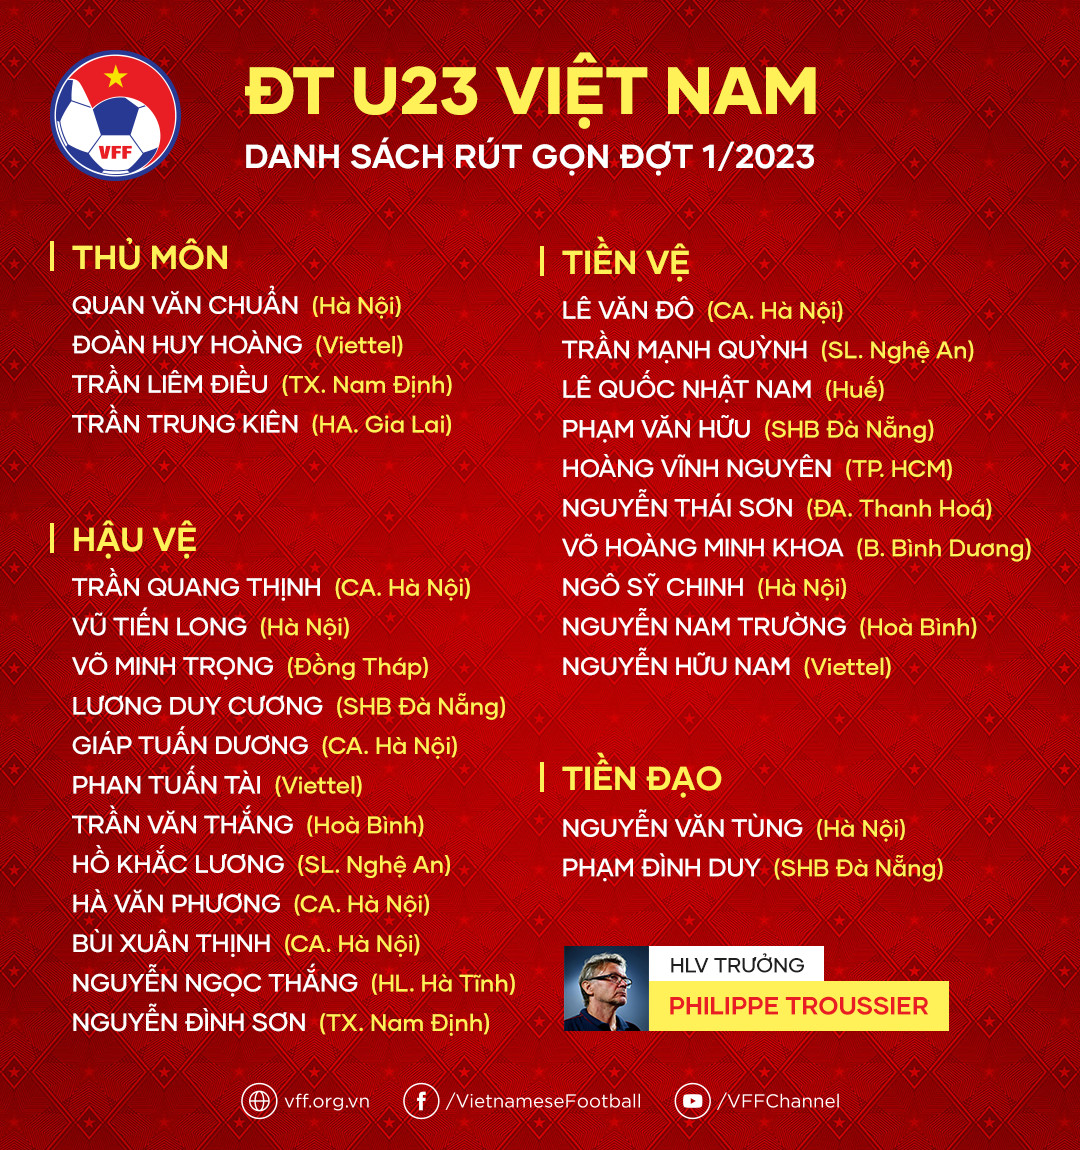 HLV Philippe Troussier loại 13 cầu thủ U23 Việt Nam sau 1 tuần - Ảnh 2.